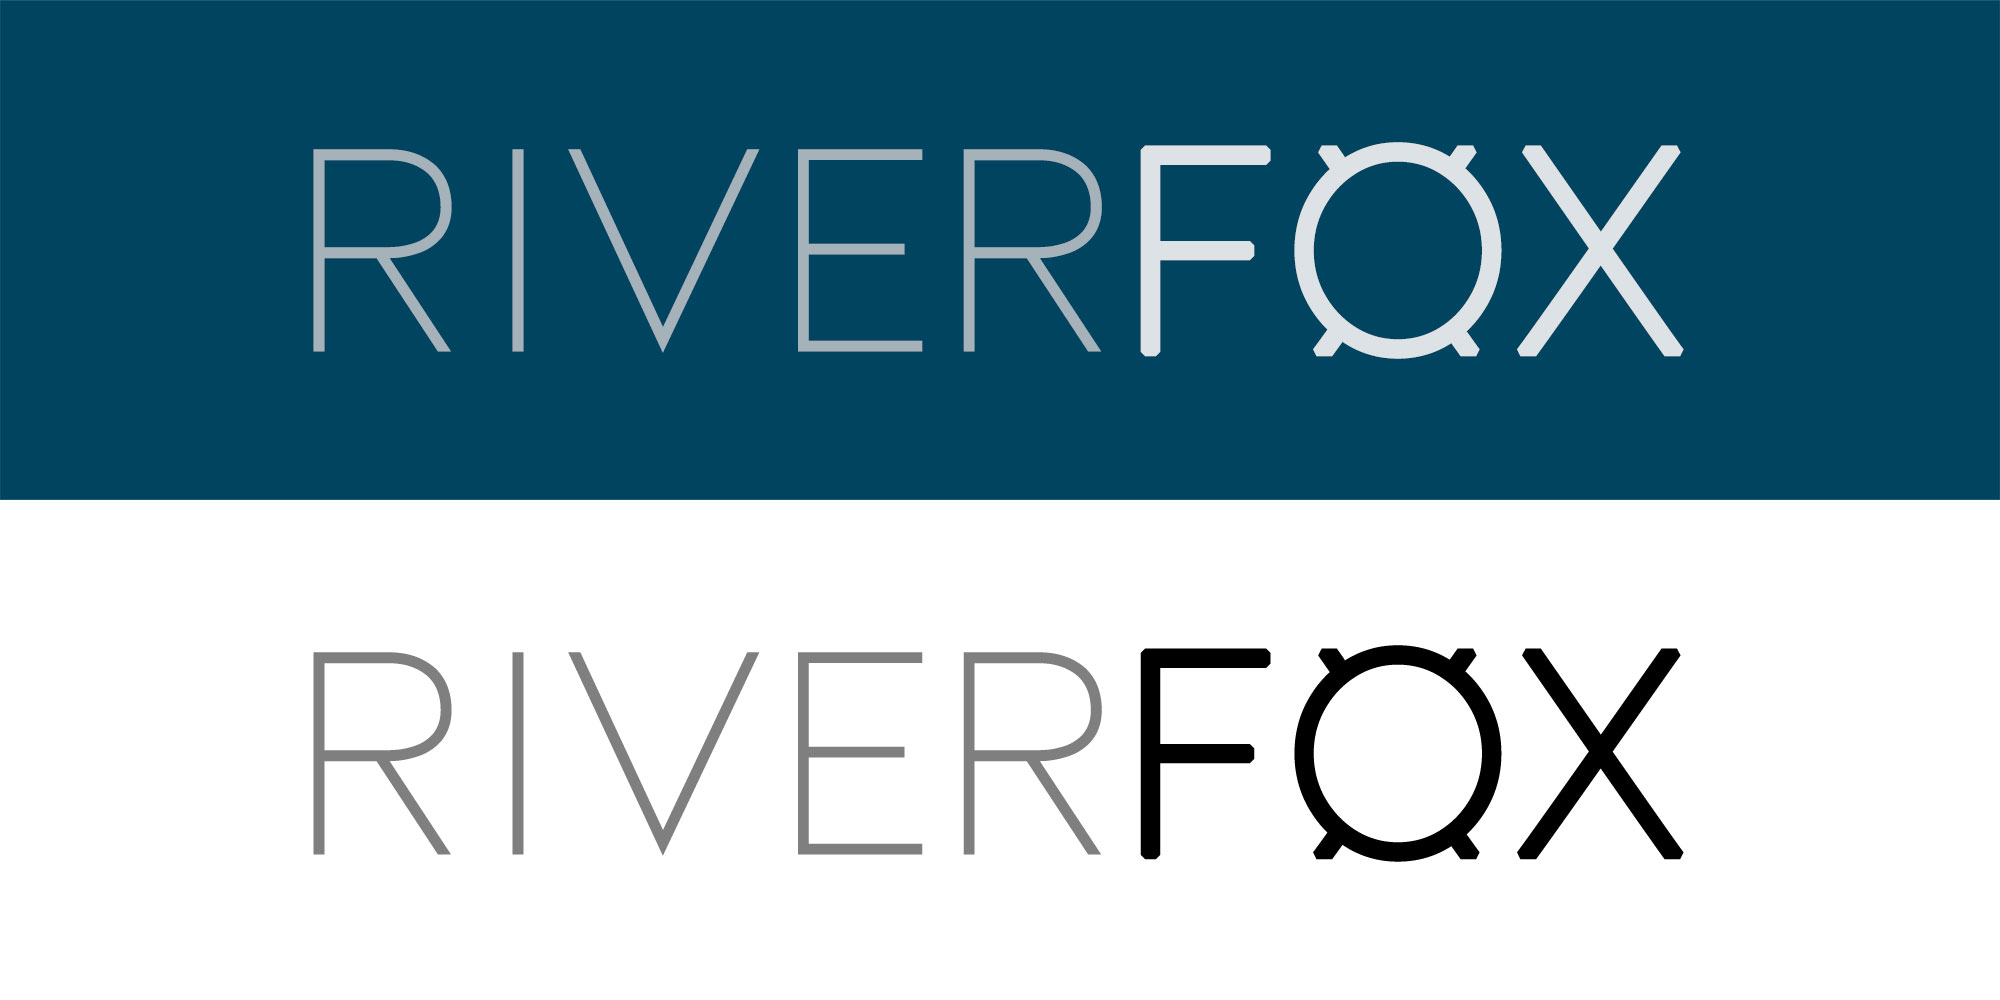 Riverfox text logo